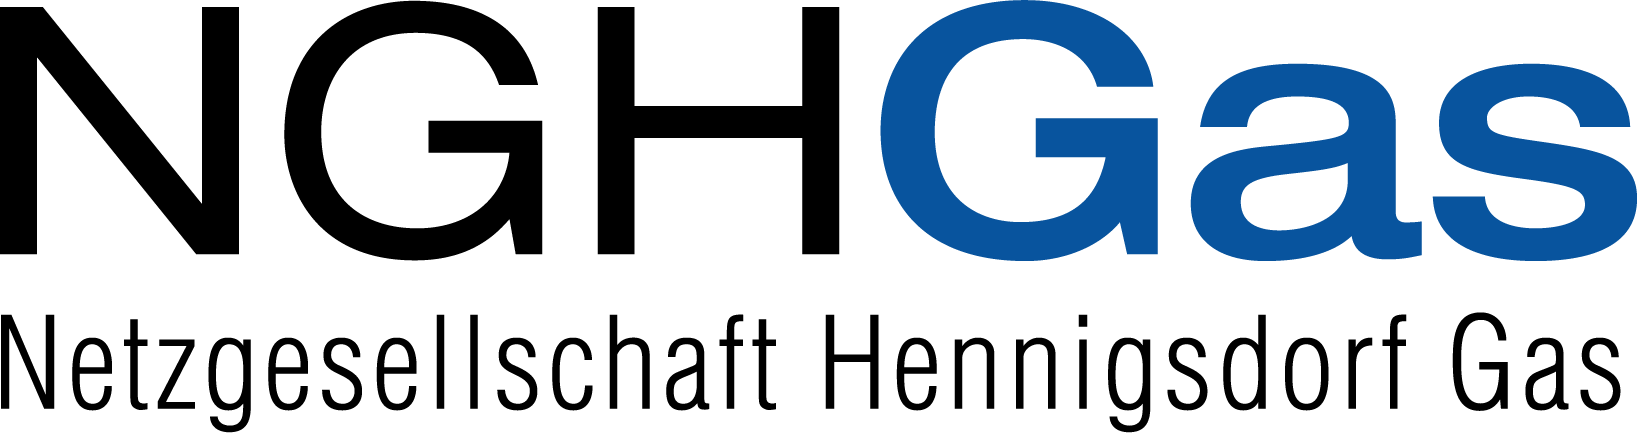 Netzgesellschaft Hennigsdorf Gas mbH